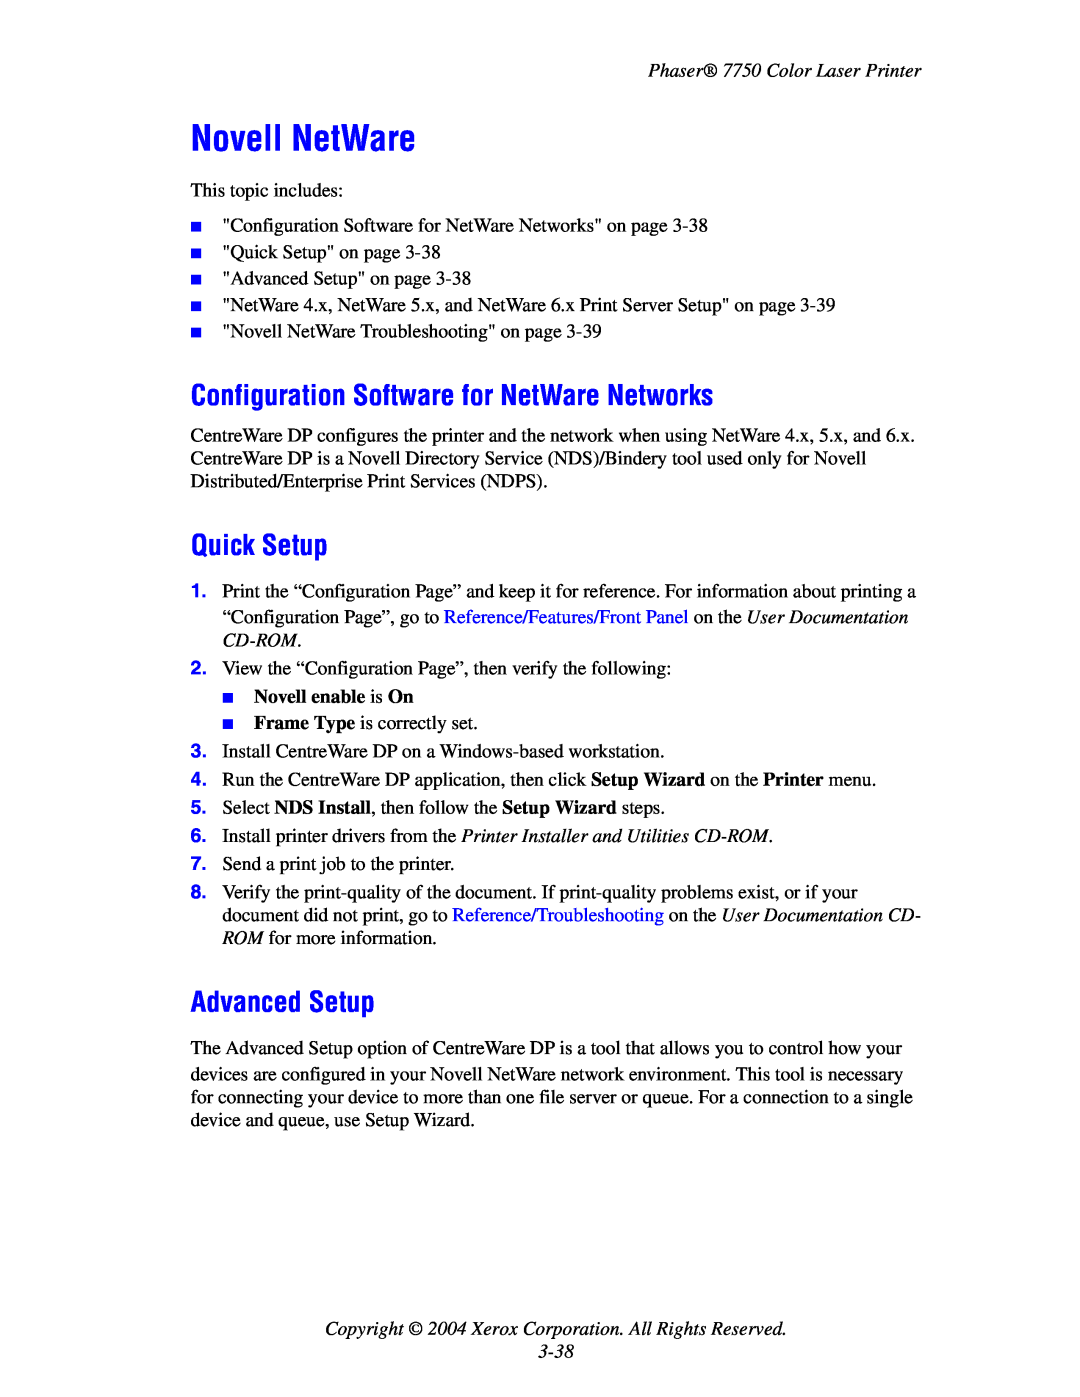 3Com 7750 manual Configuration Software for NetWare Networks, Quick Setup, Advanced Setup, Novell NetWare, 3-38 